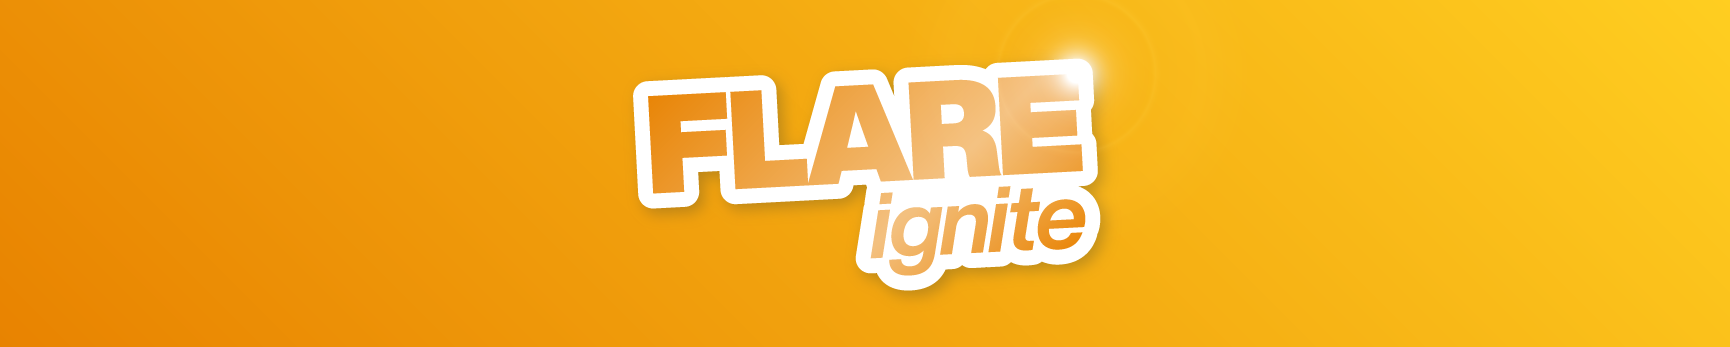 Flare ignite logo